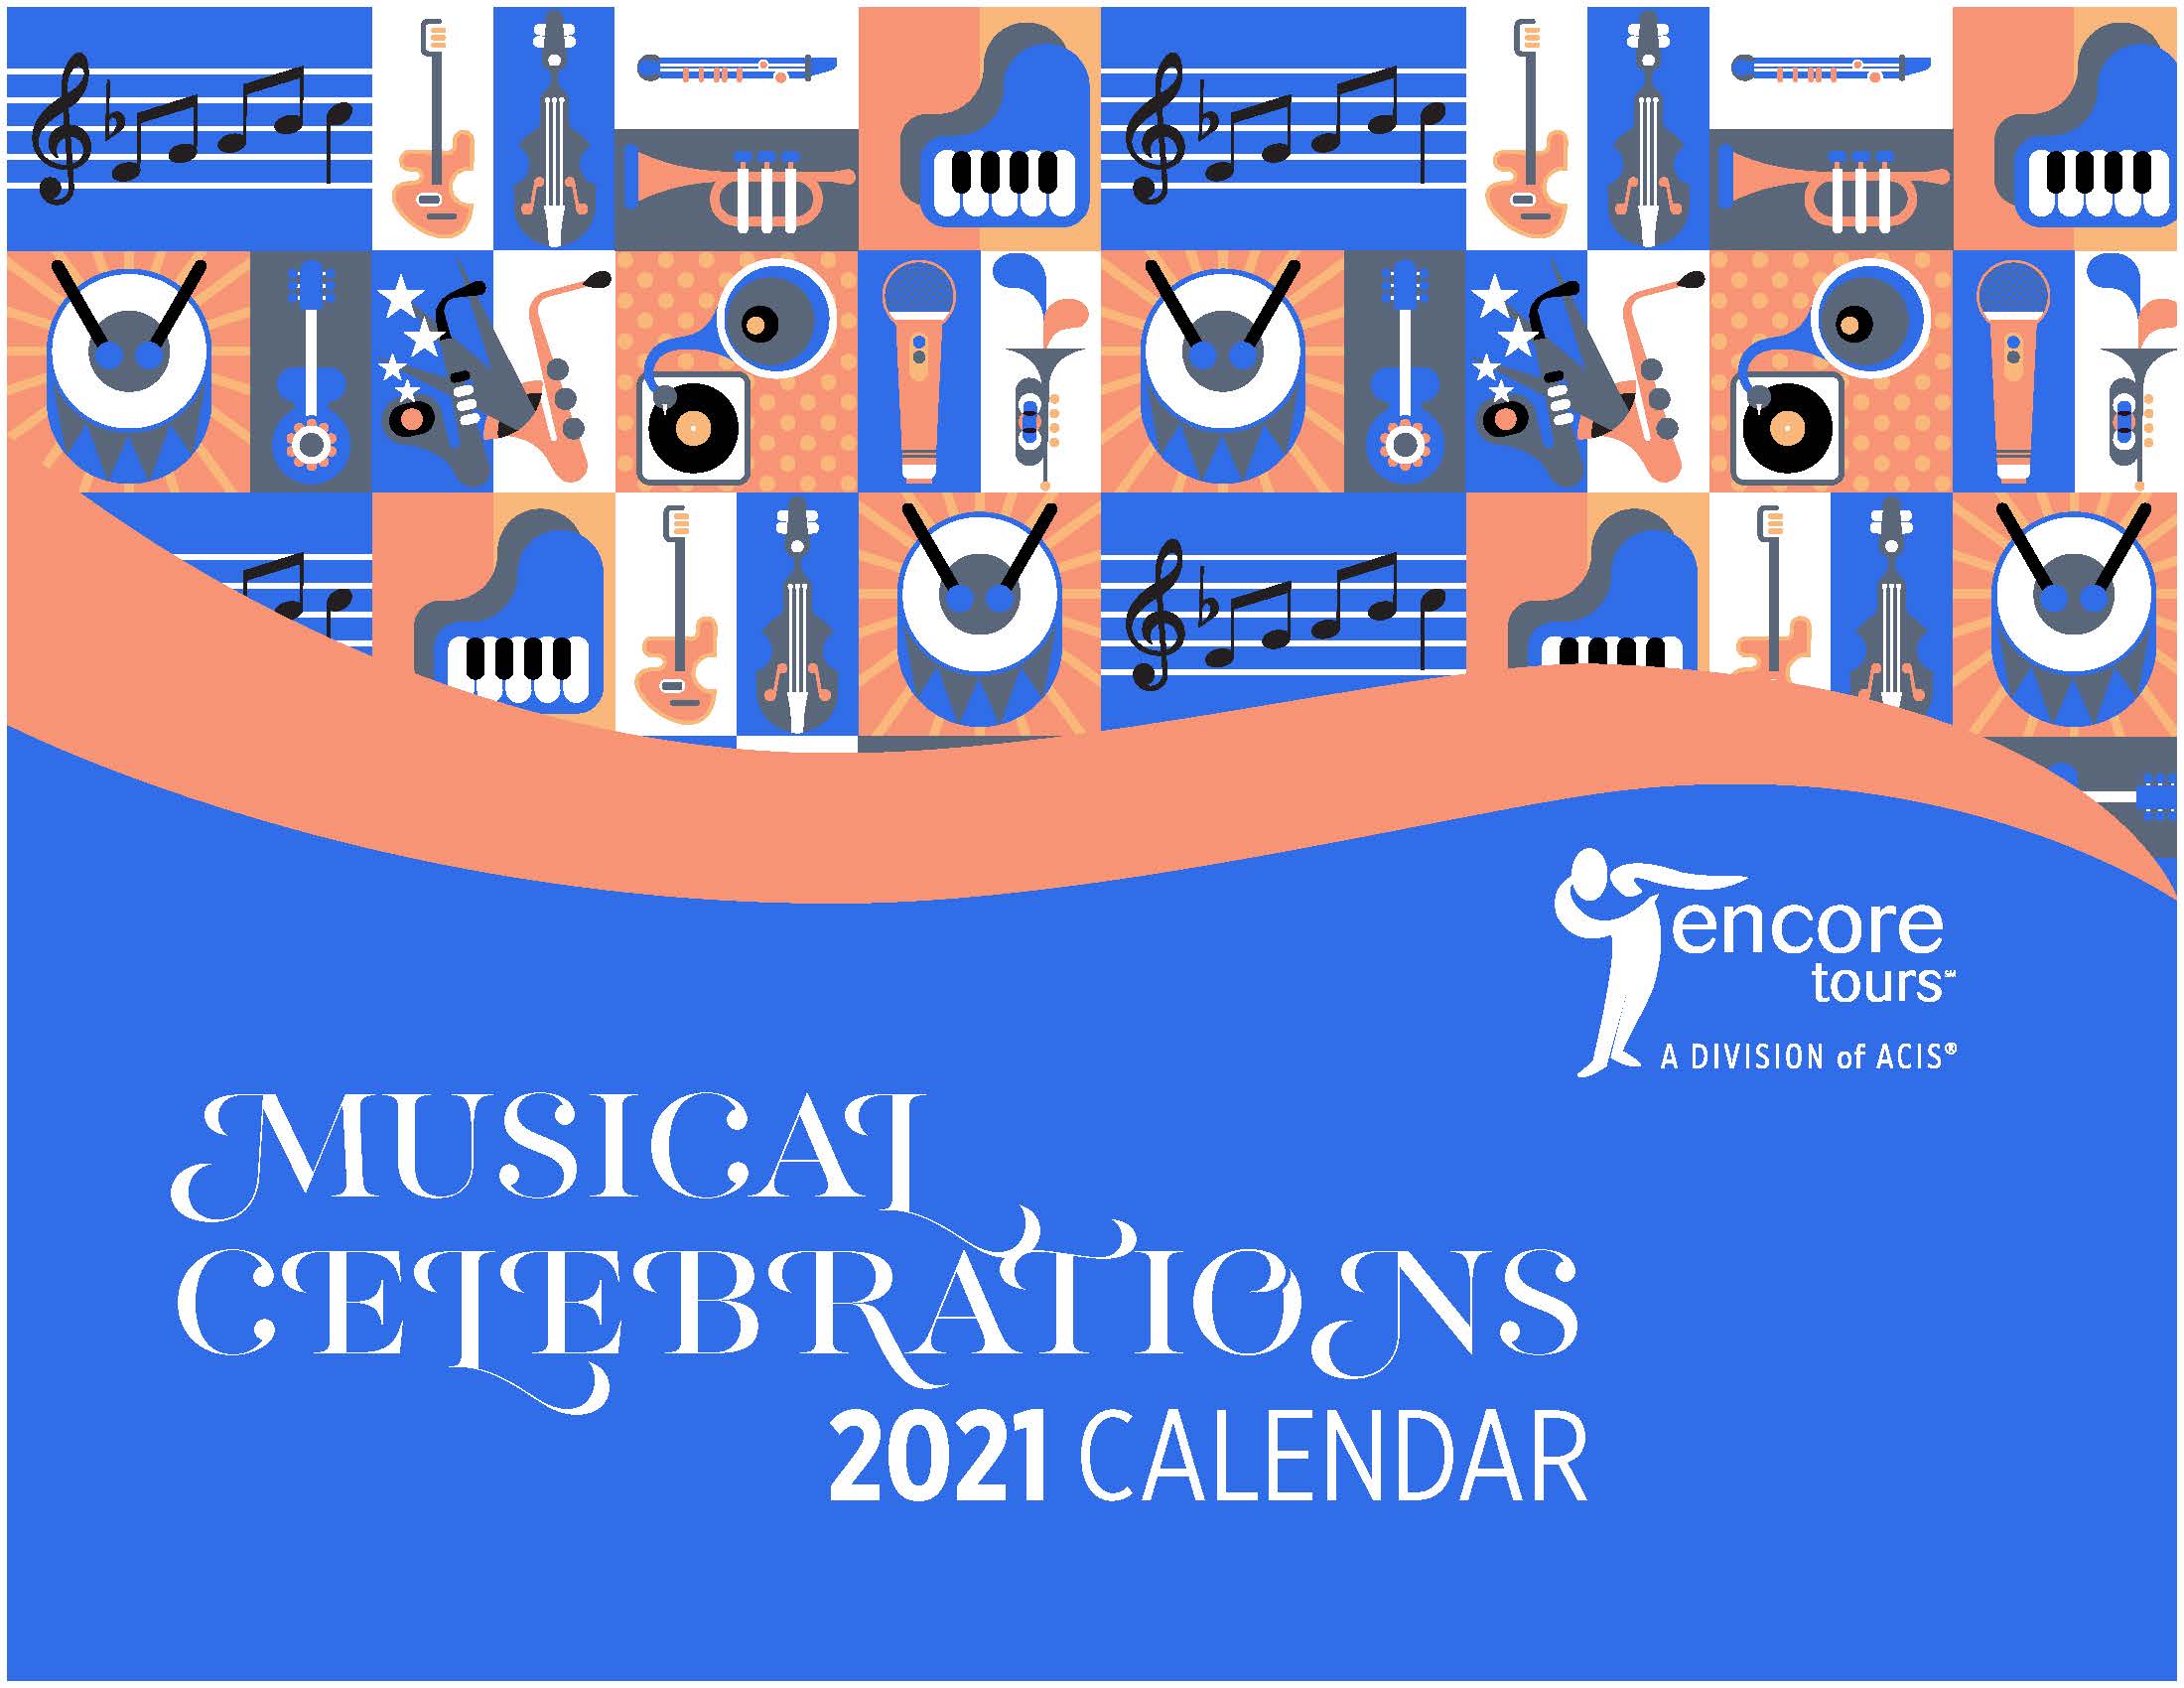 Musical Celebrations Calendar (2)_Page_01.jpg